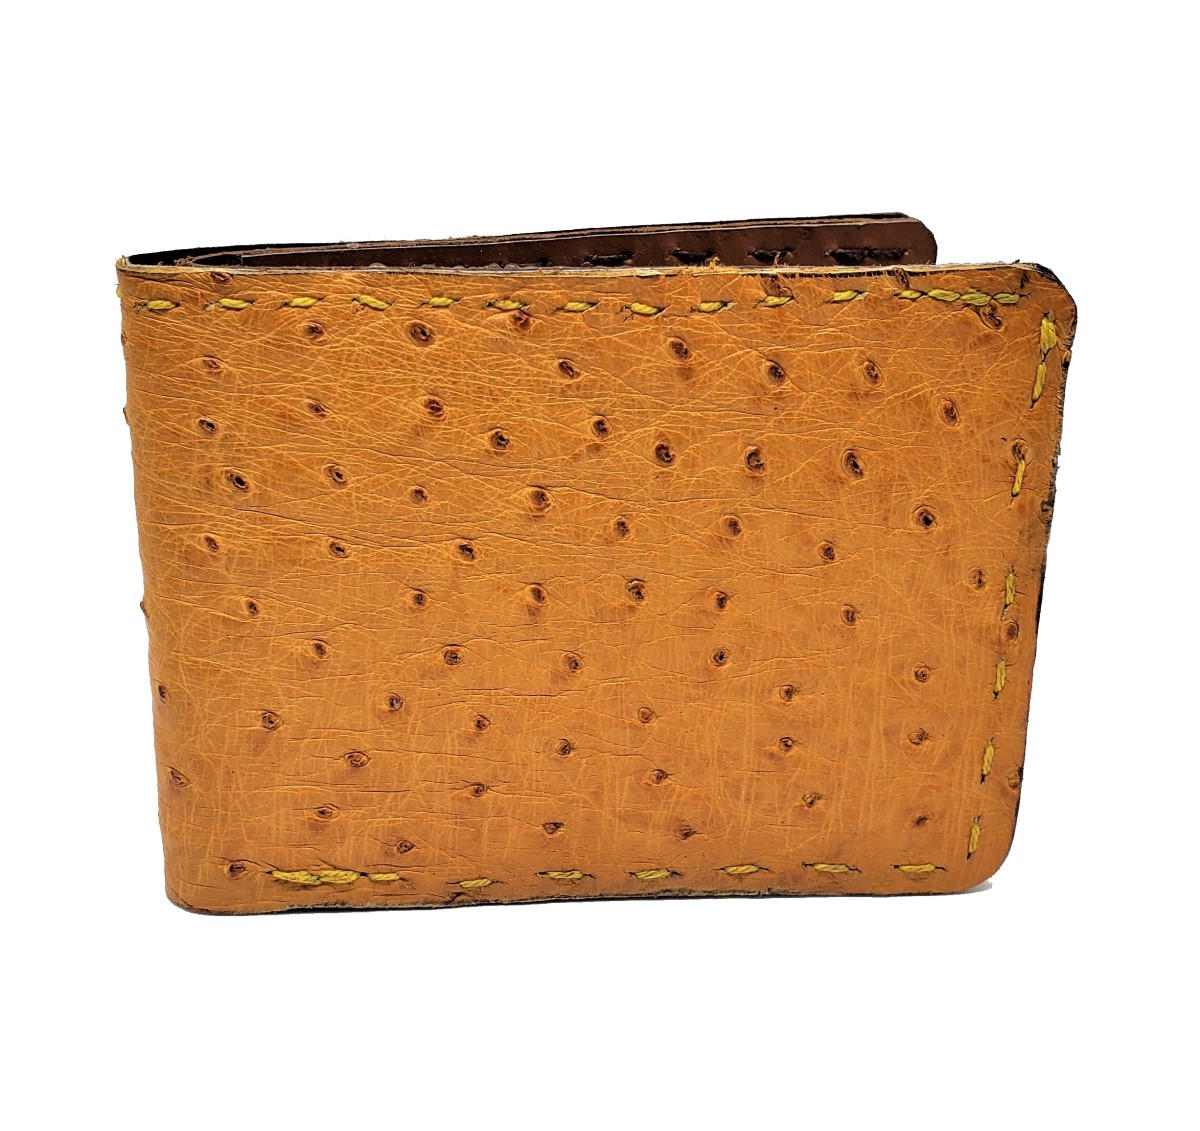 Exotic Orange Genuine Ostrich Skin Leather Handbag